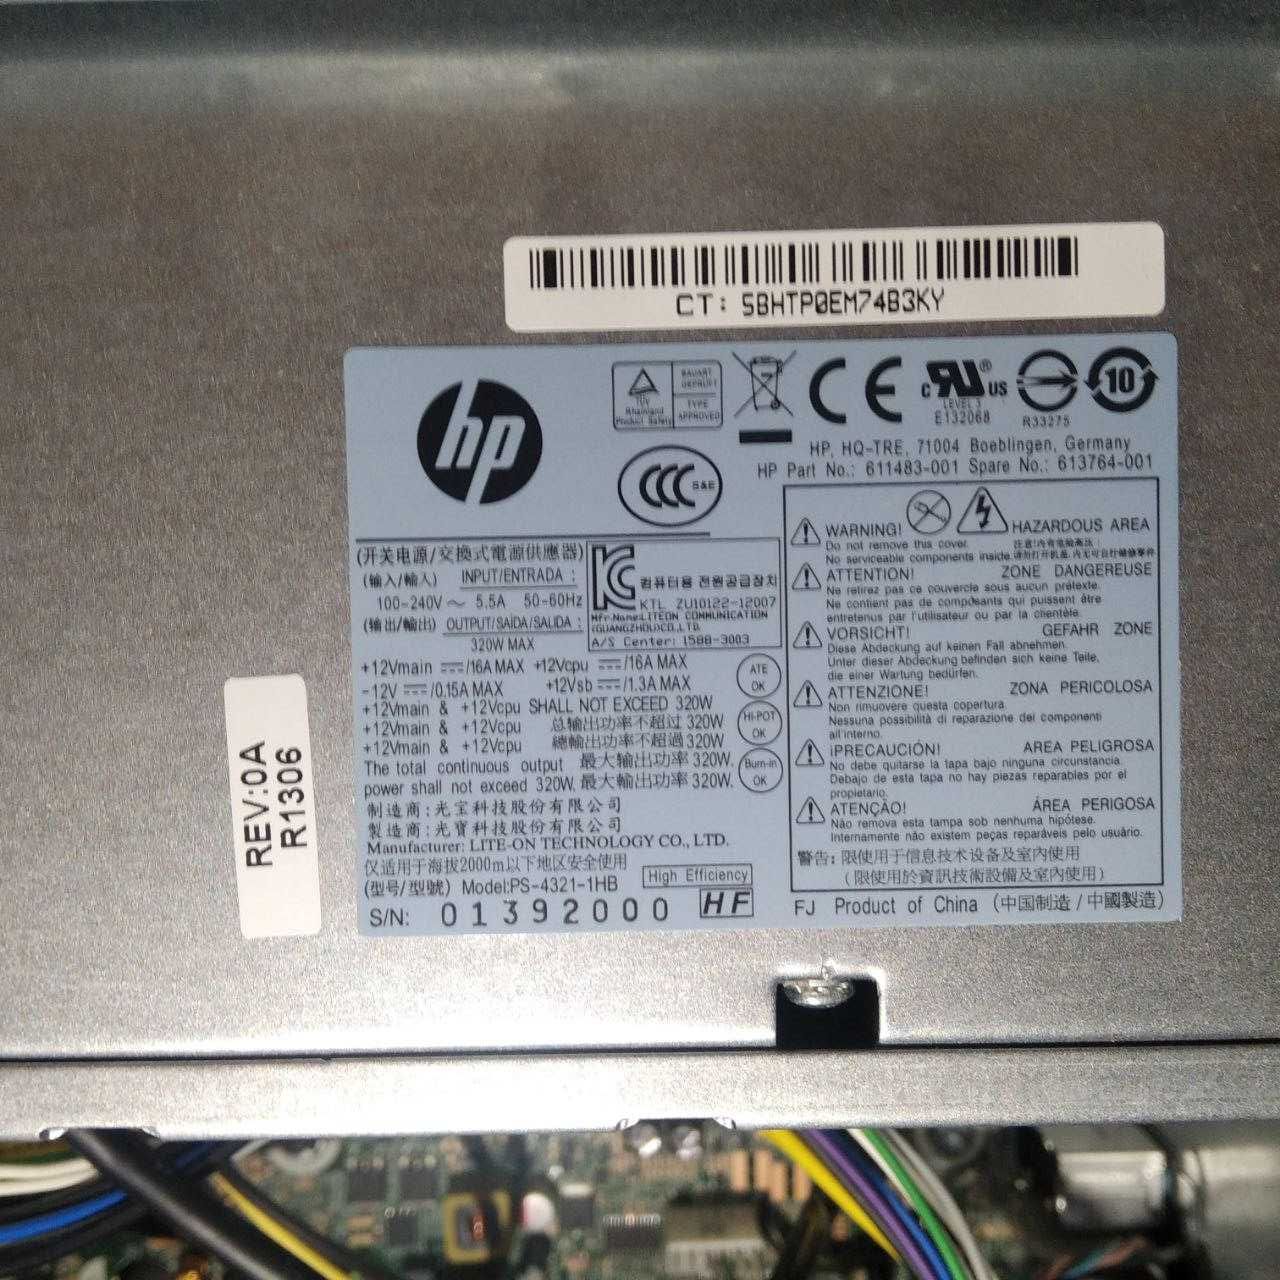 Компютер ПК системний блок HP 6300 МТ Intel I5 3570 8Gb ram 500Gb hdd